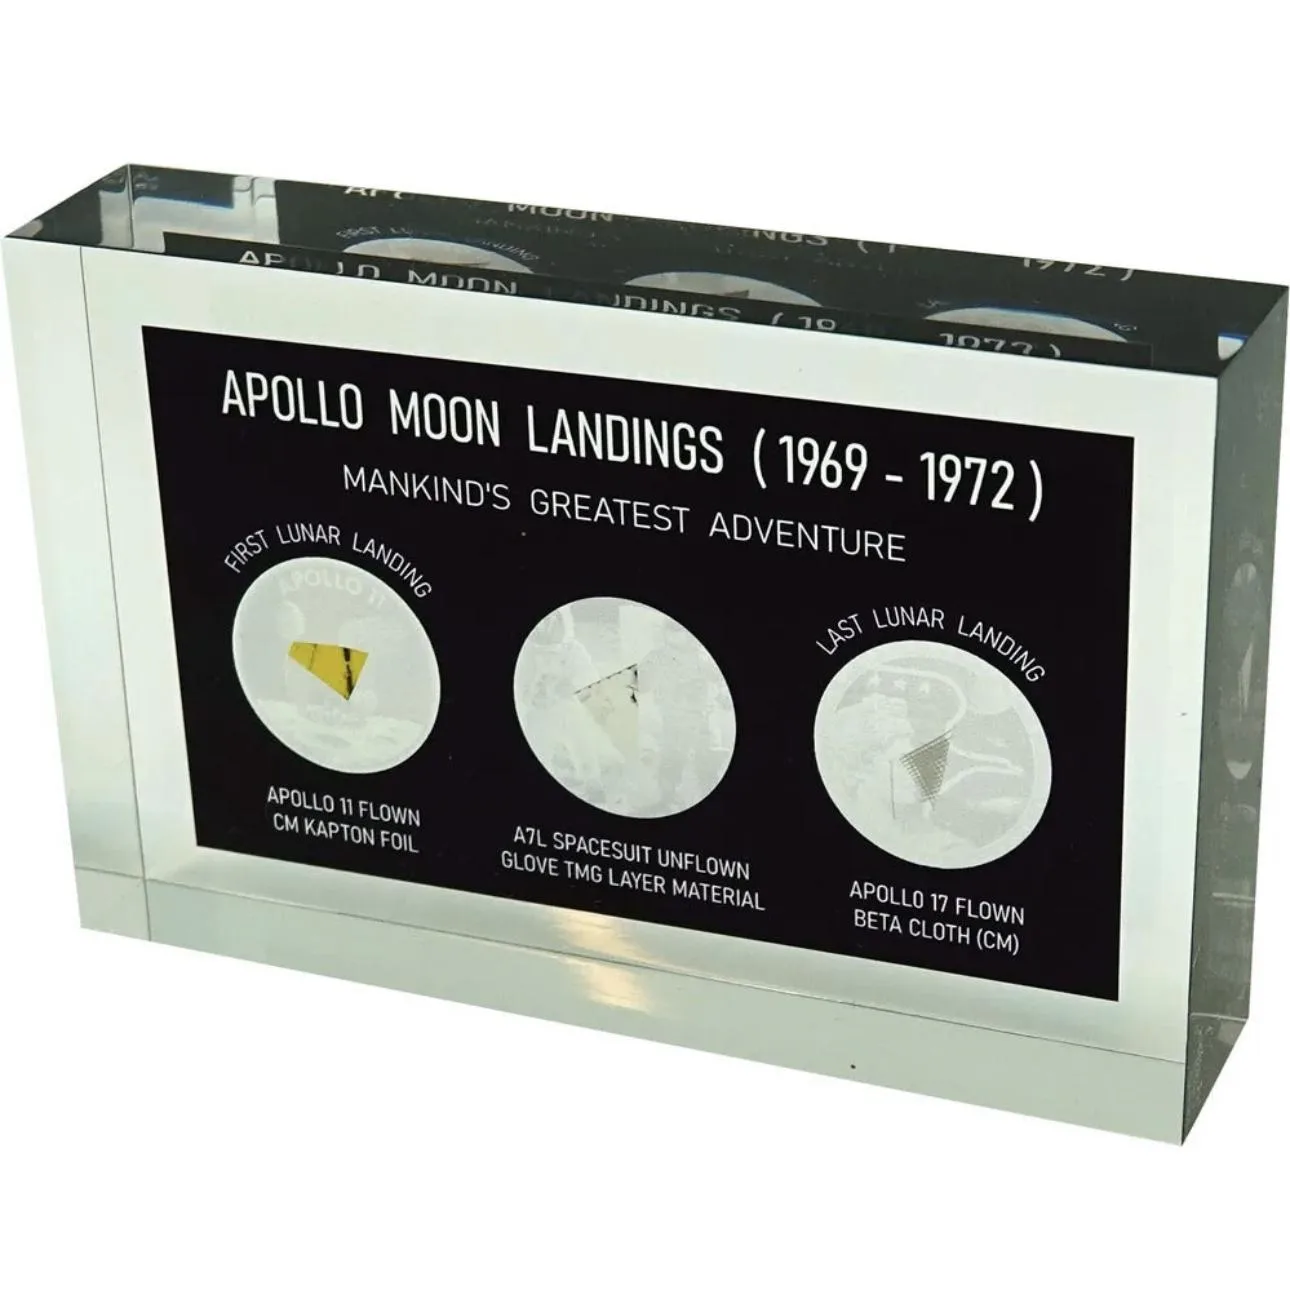 Genuine Apollo moon landing artifacts Prehistoric Online